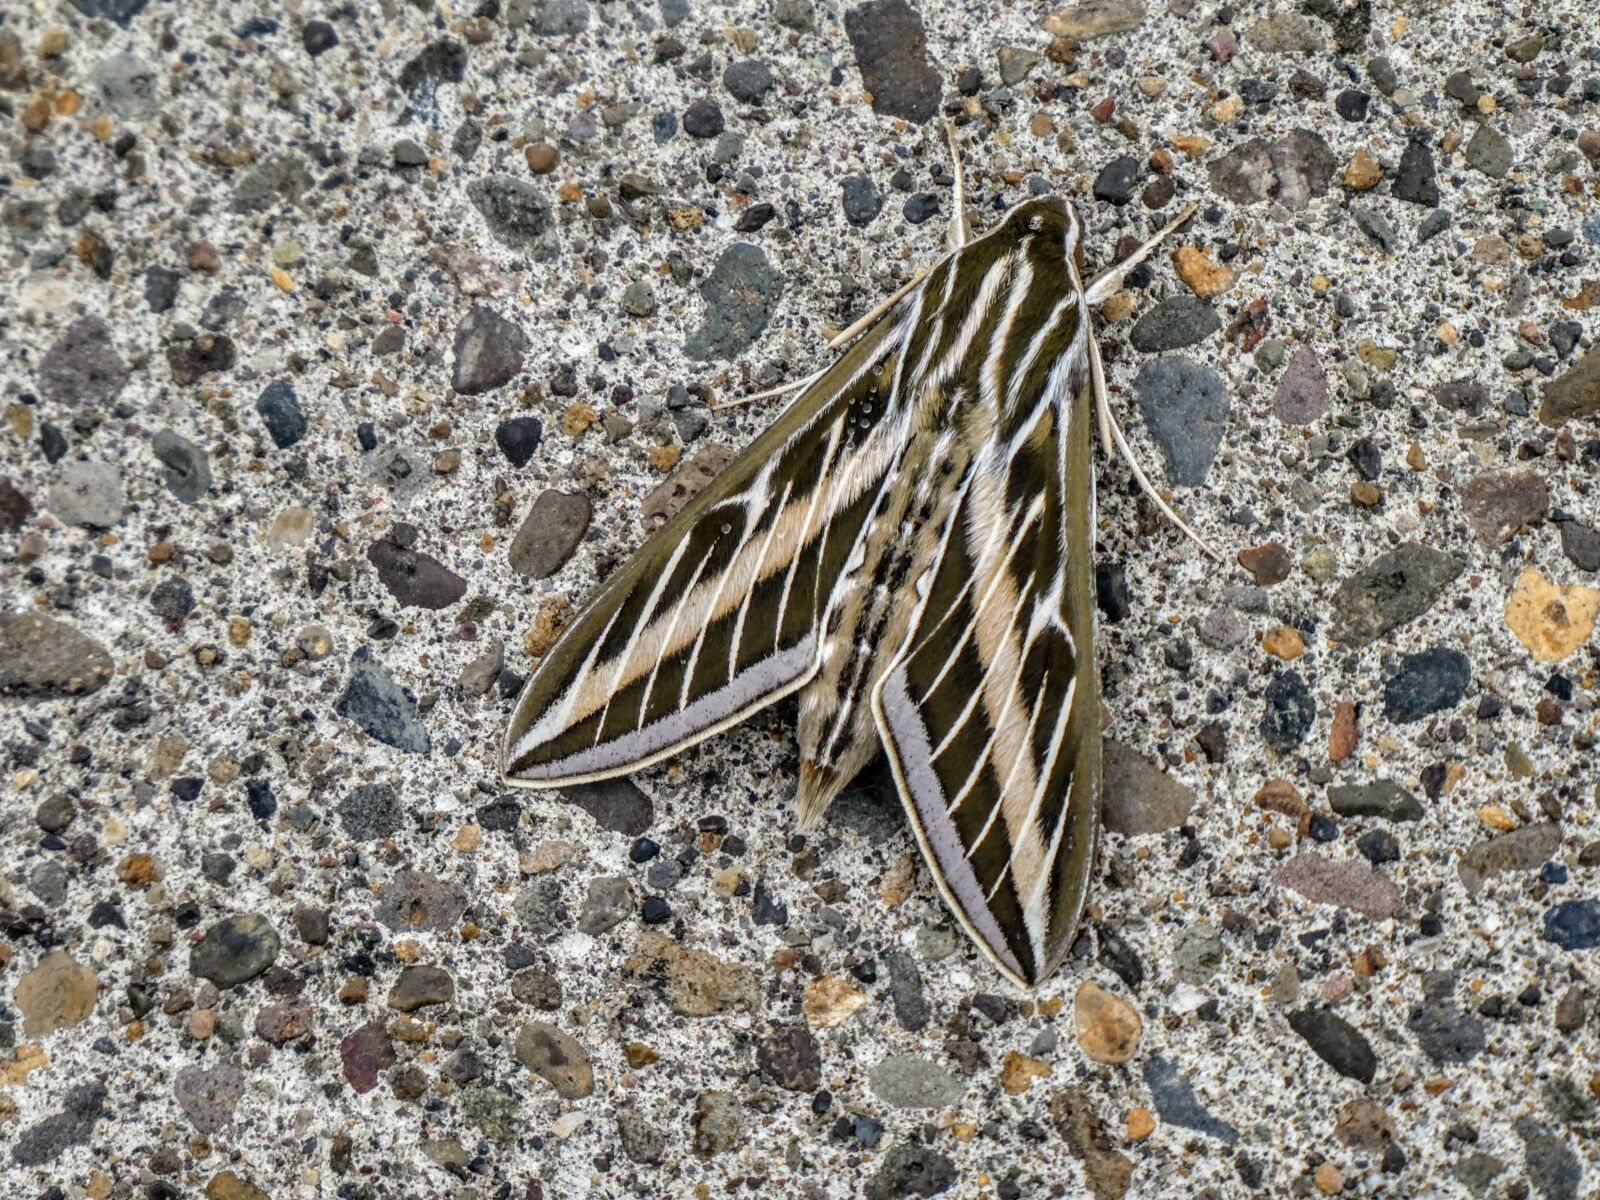 Panasonic DC-ZS70 sample photo. Sphinx moth, moth, nature photography